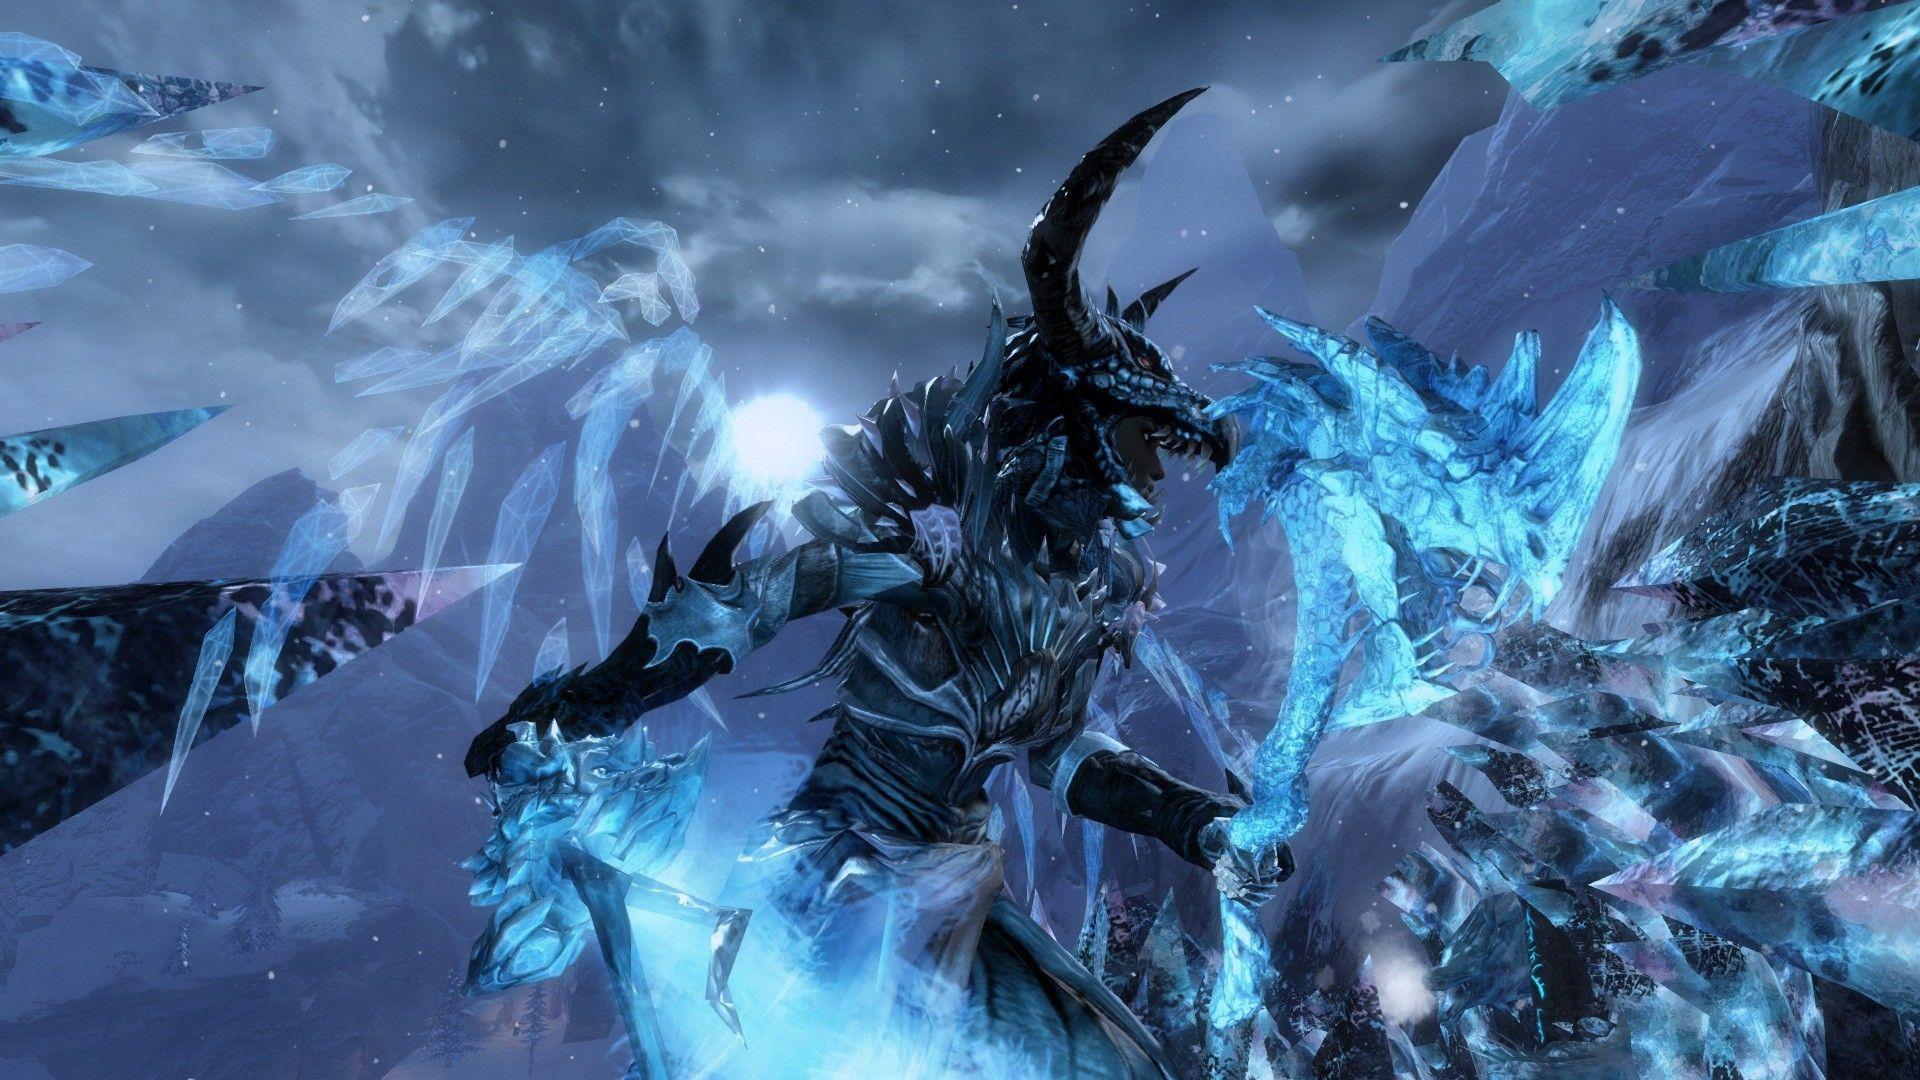 Cool Ice Dragon Logo - Ice Dragon Wallpaper